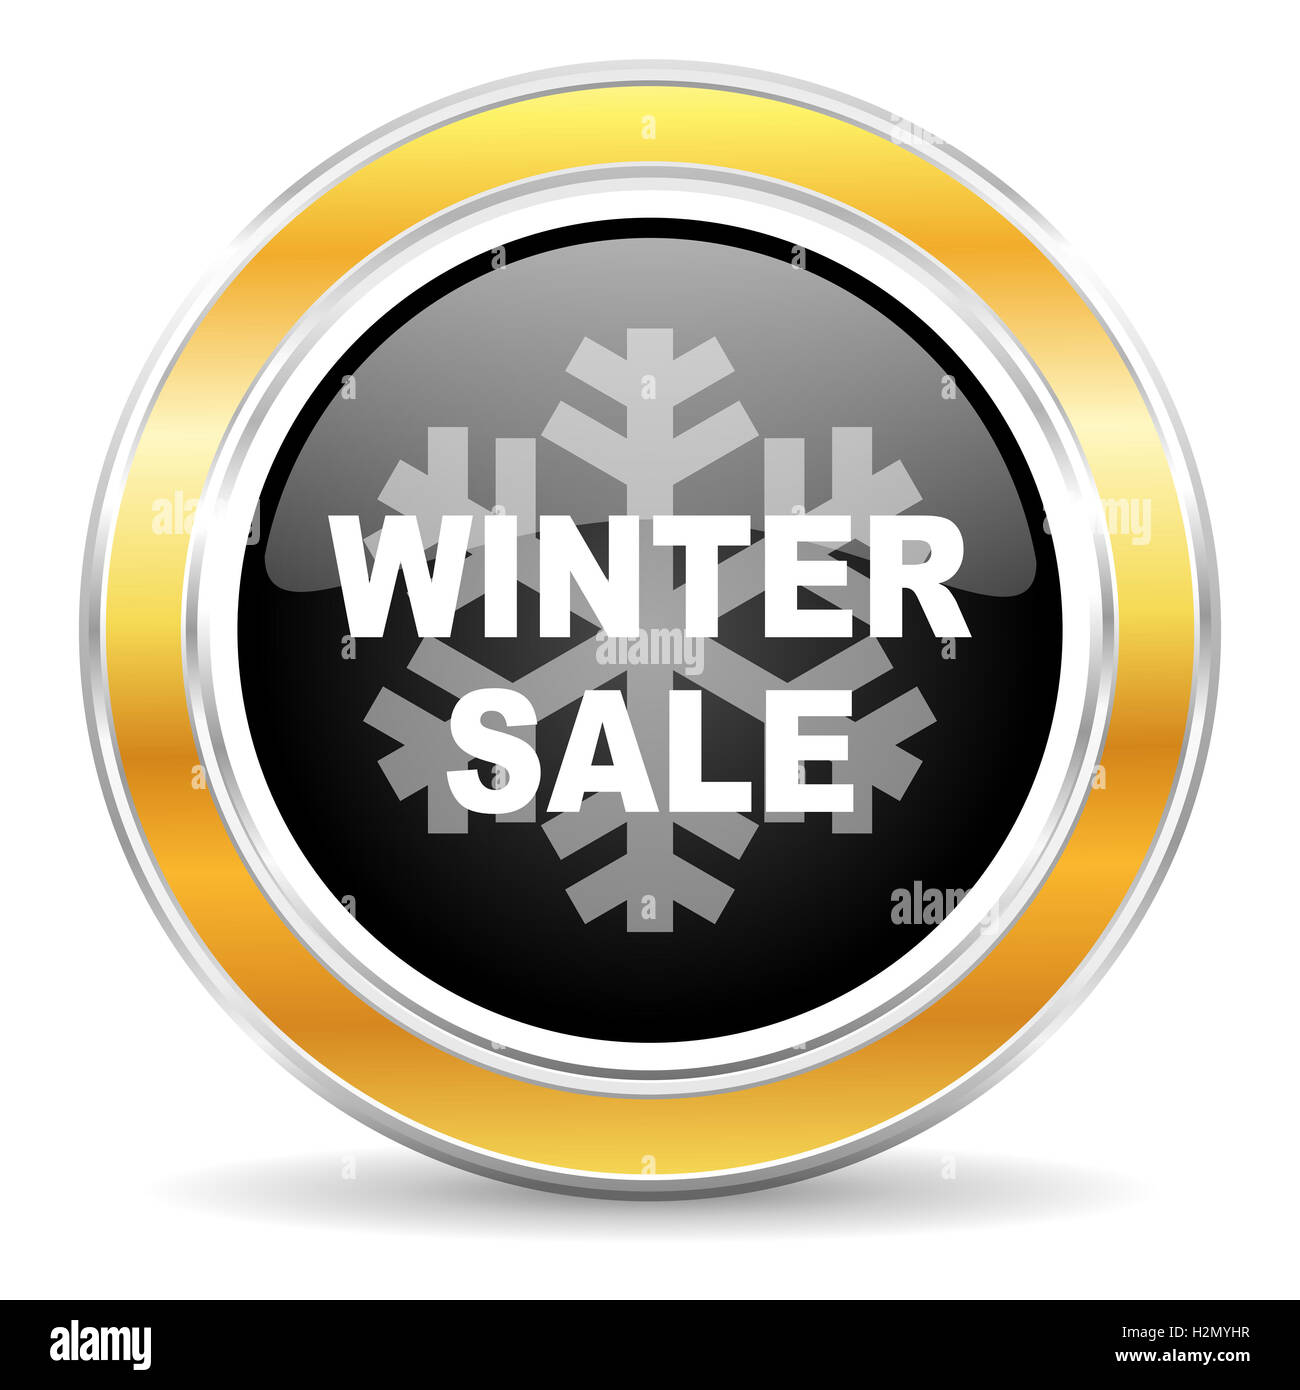 winter sale icon Stock Photo